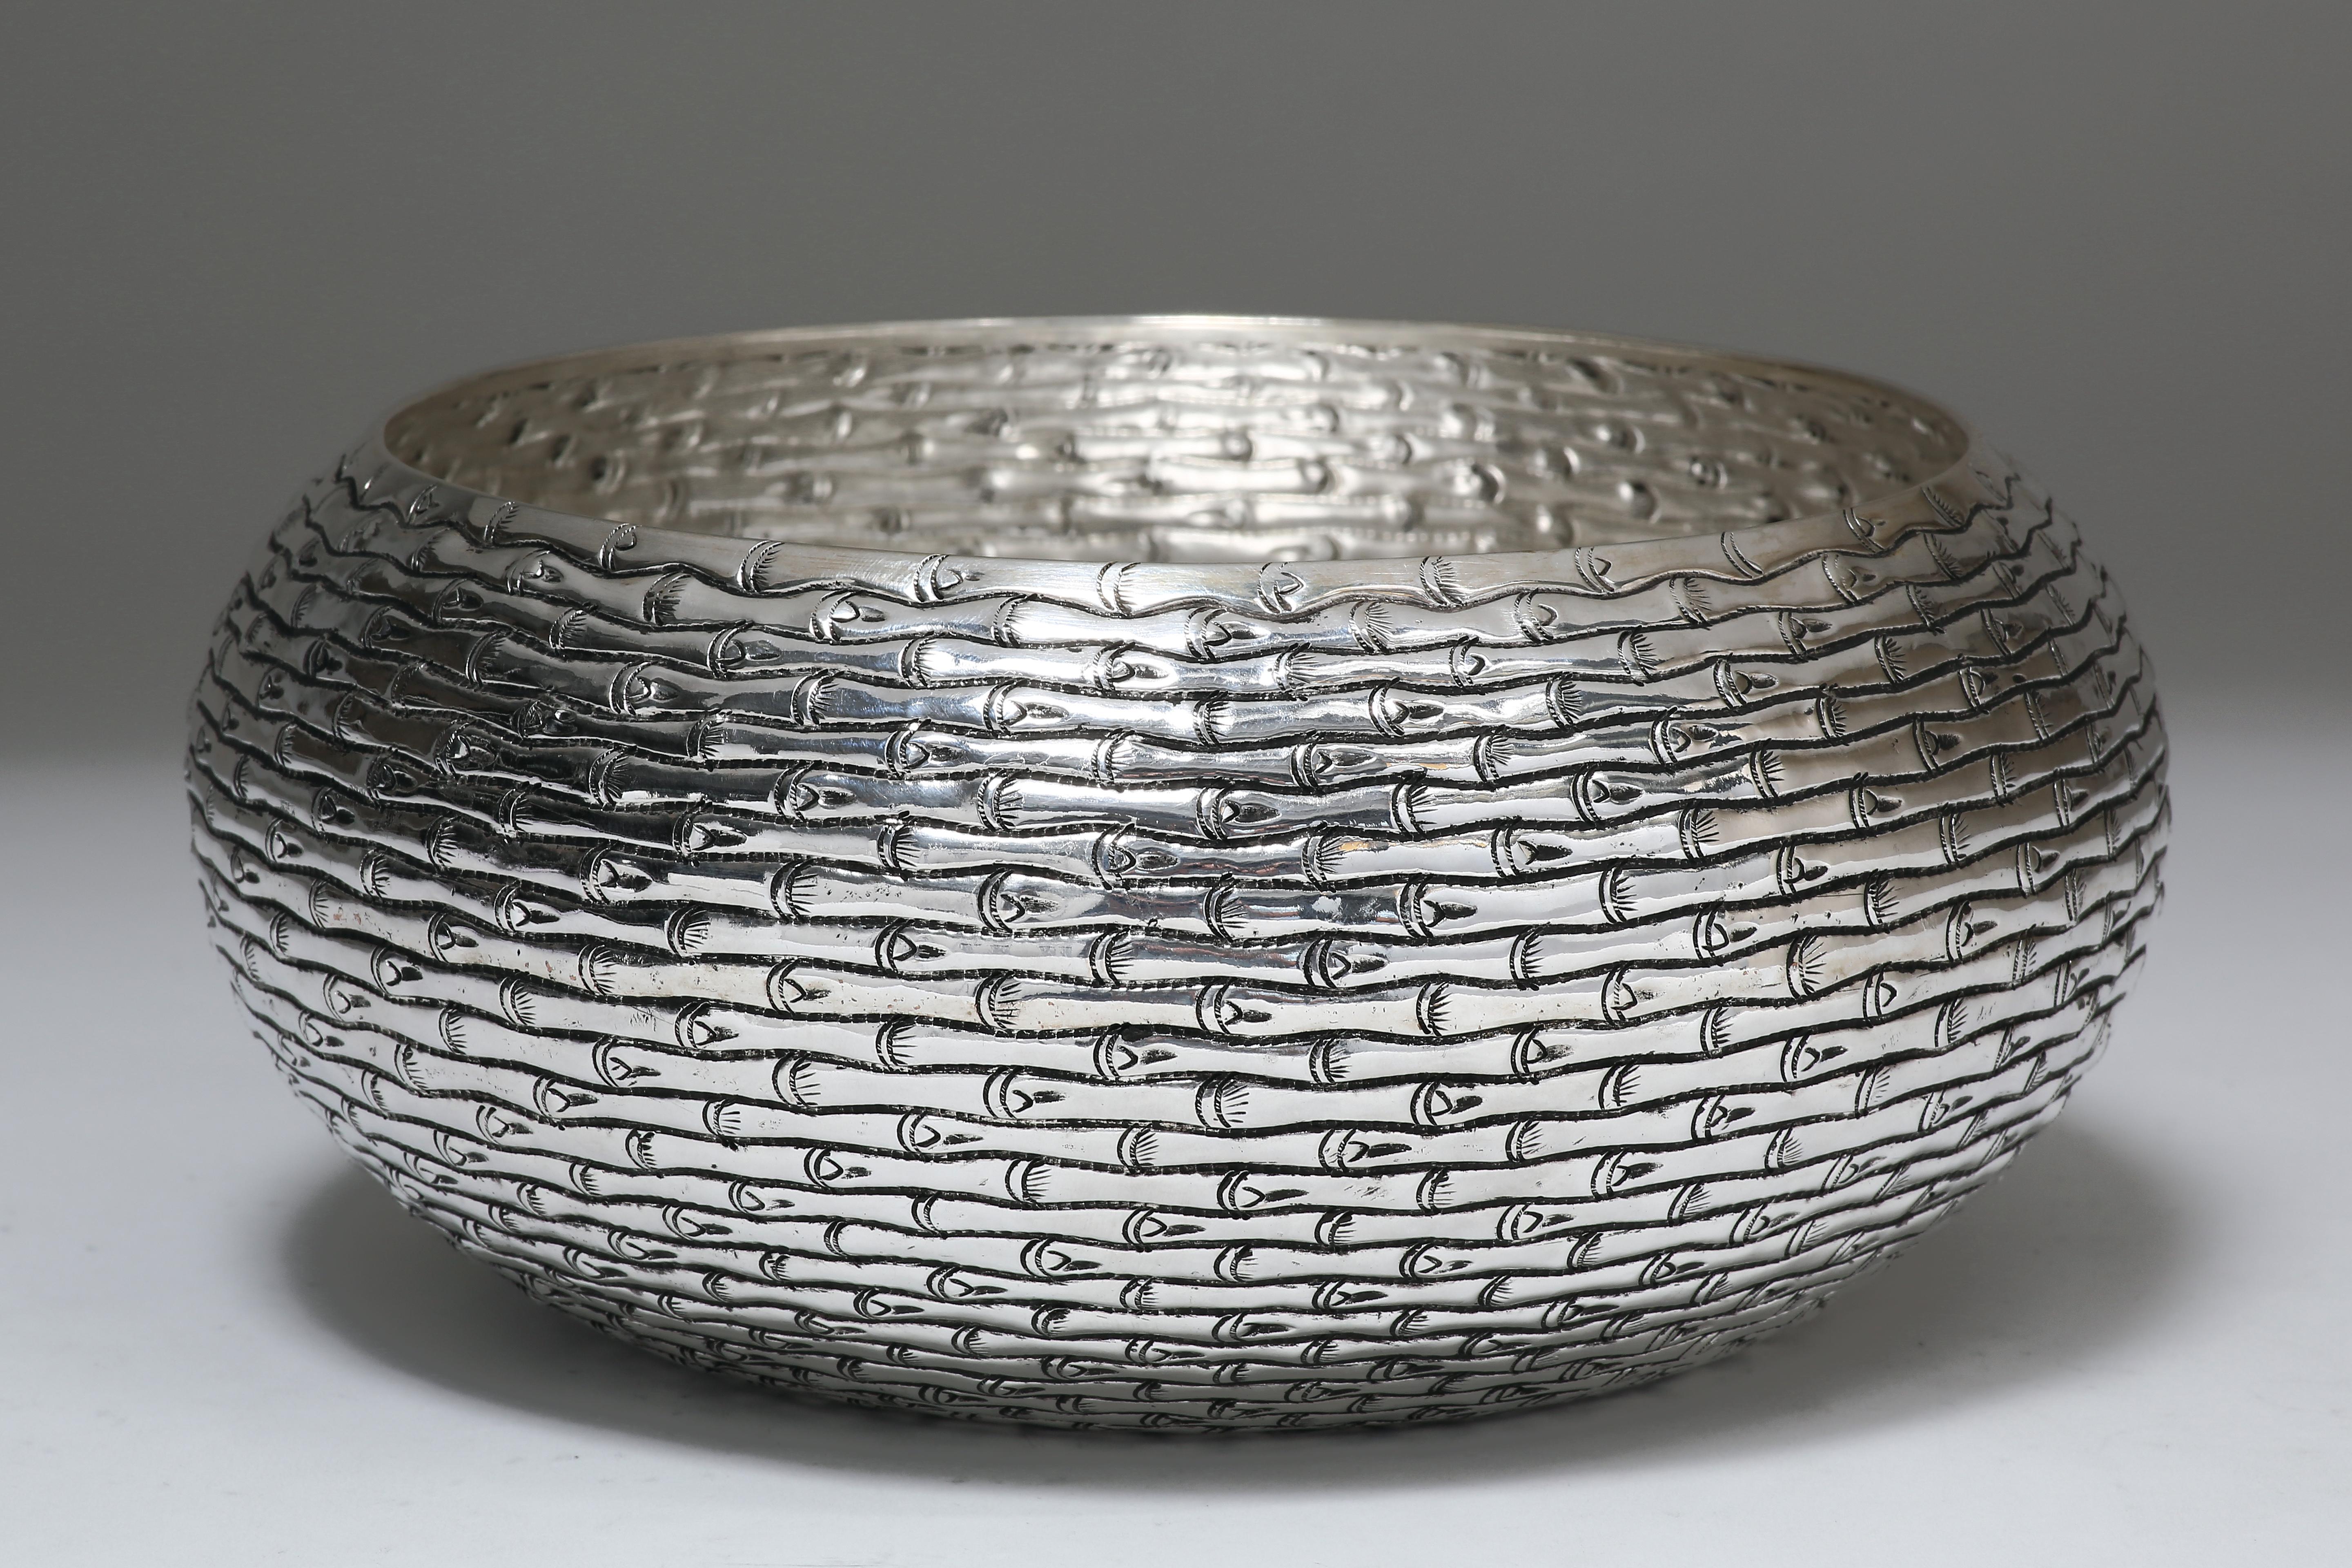 Hong Kong Hand-Worked Solid Silver Bowl, Bamboo Motif, Centerpiece